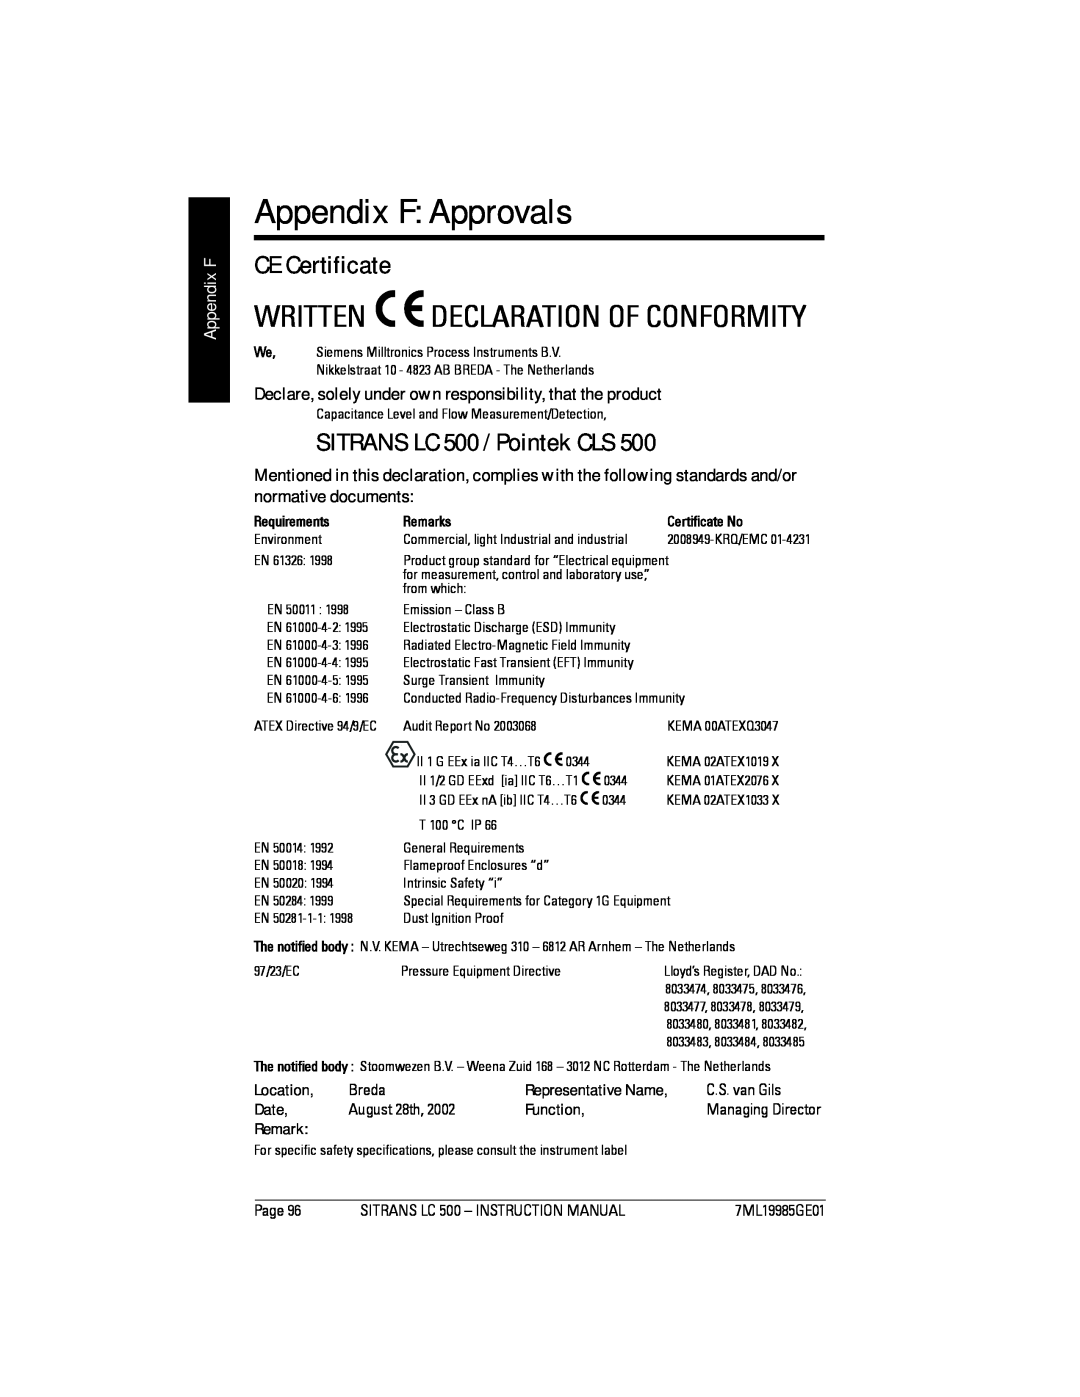 Siemens Appendix F Approvals, CE Certificate, SITRANS LC 500 / Pointek CLS, Written Declaration Of Conformity, Location 